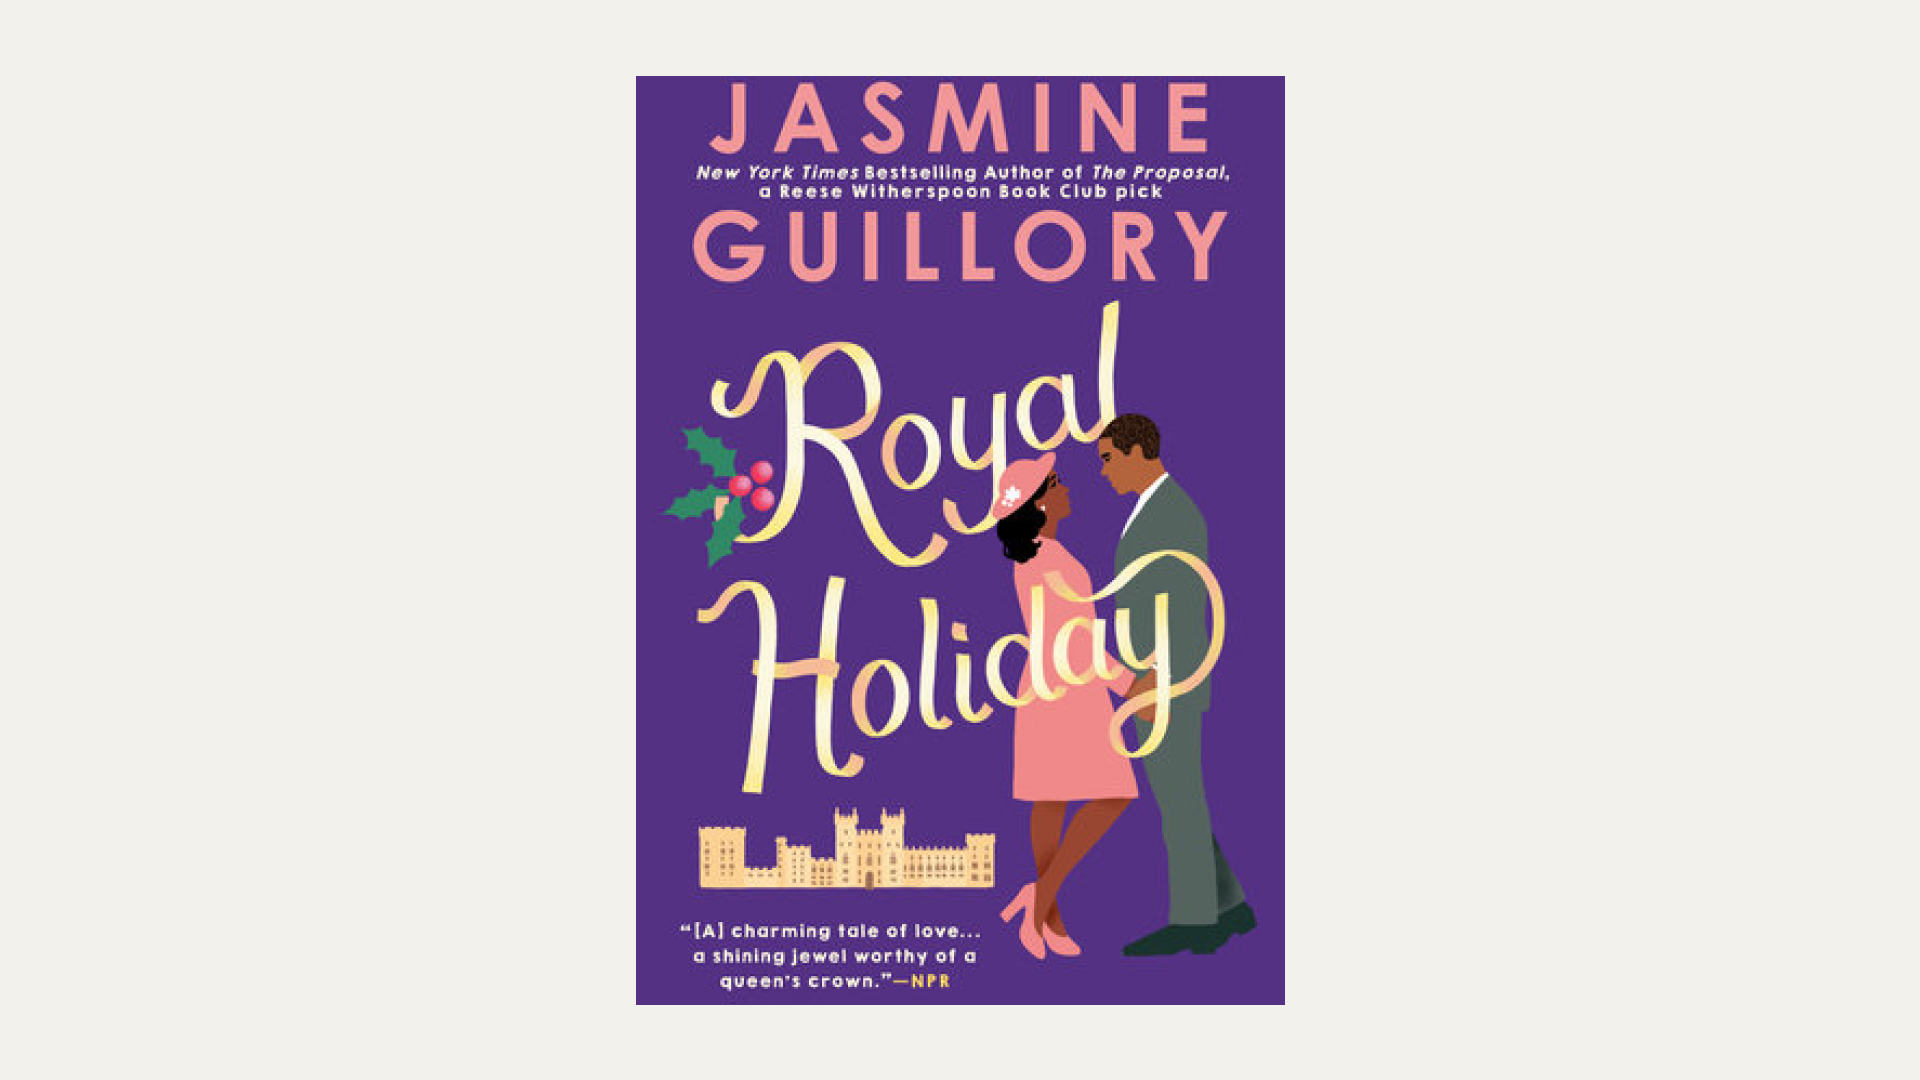 “Royal Holiday” by Jasmine Guillory